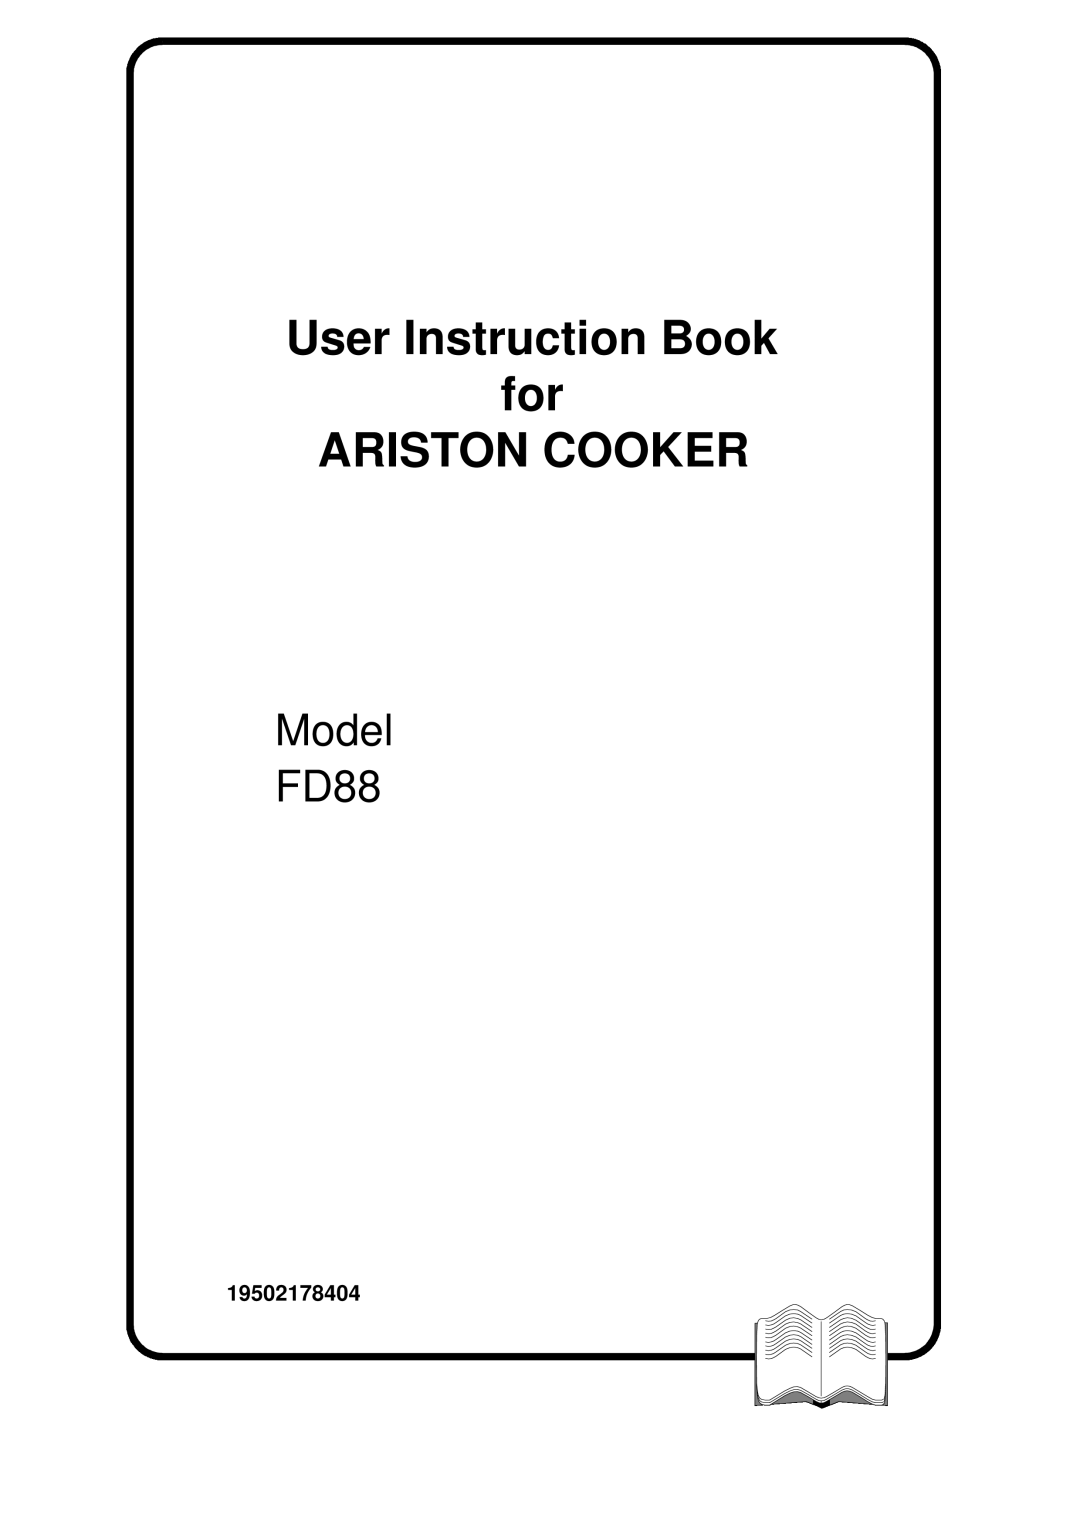 Ariston FD88 manual User Instruction Book for ARISTON COOKER, Model, 19502178404 